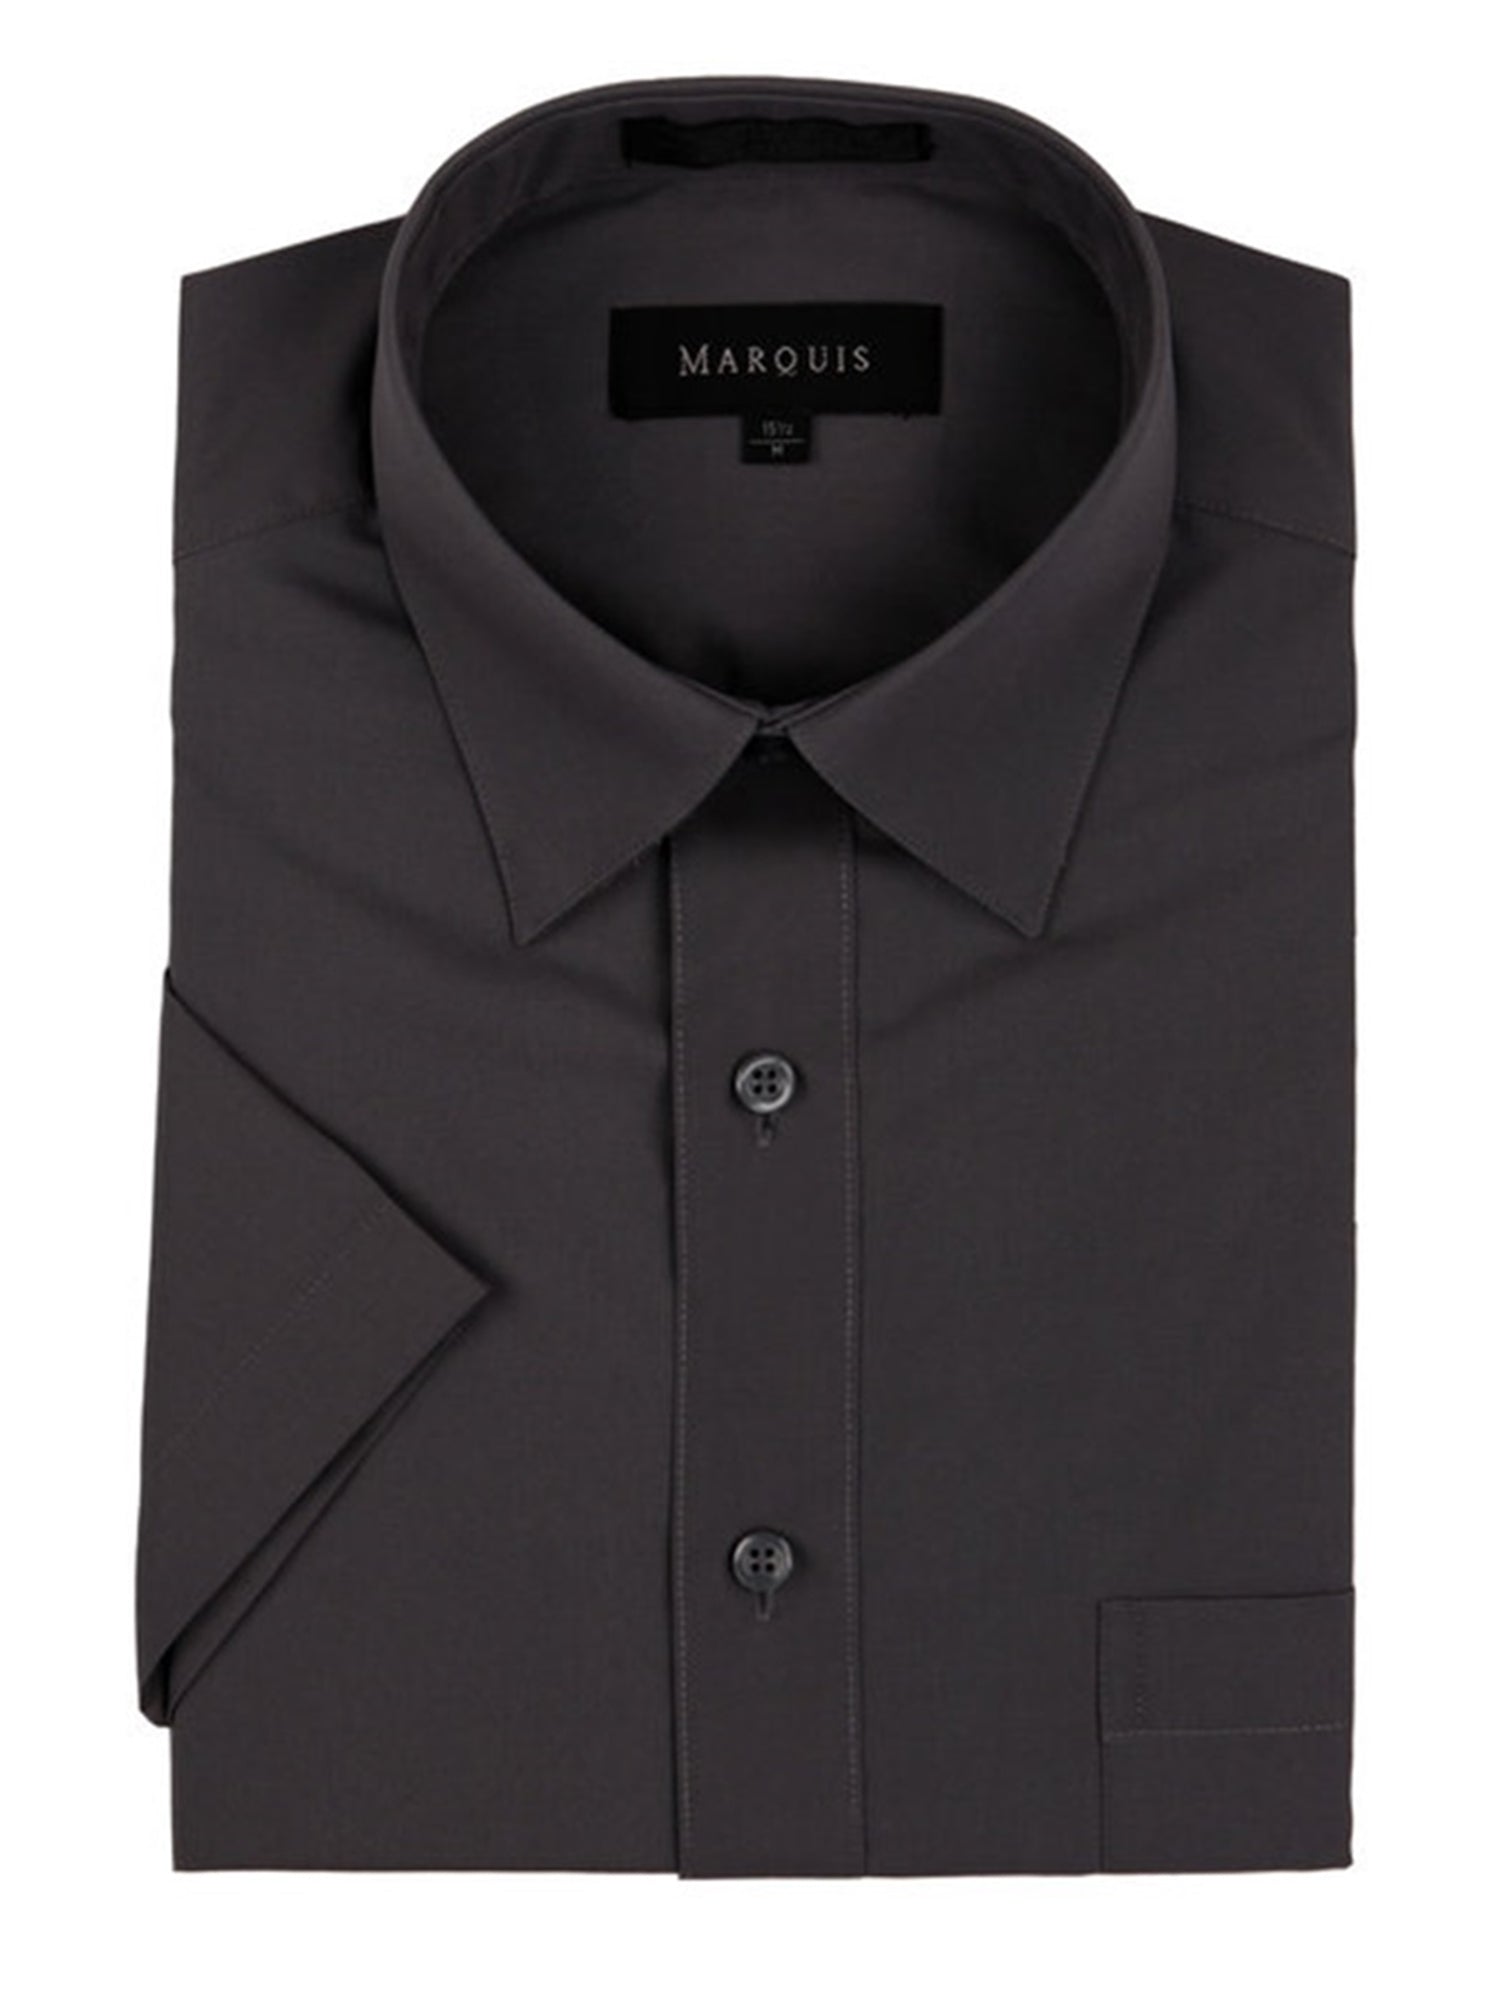 Marquis Men's Short Sleeve Regular Fit Dress Shirt - S To 4XL Men's Dress Shirts Marquis Charcoal Small/14.5 